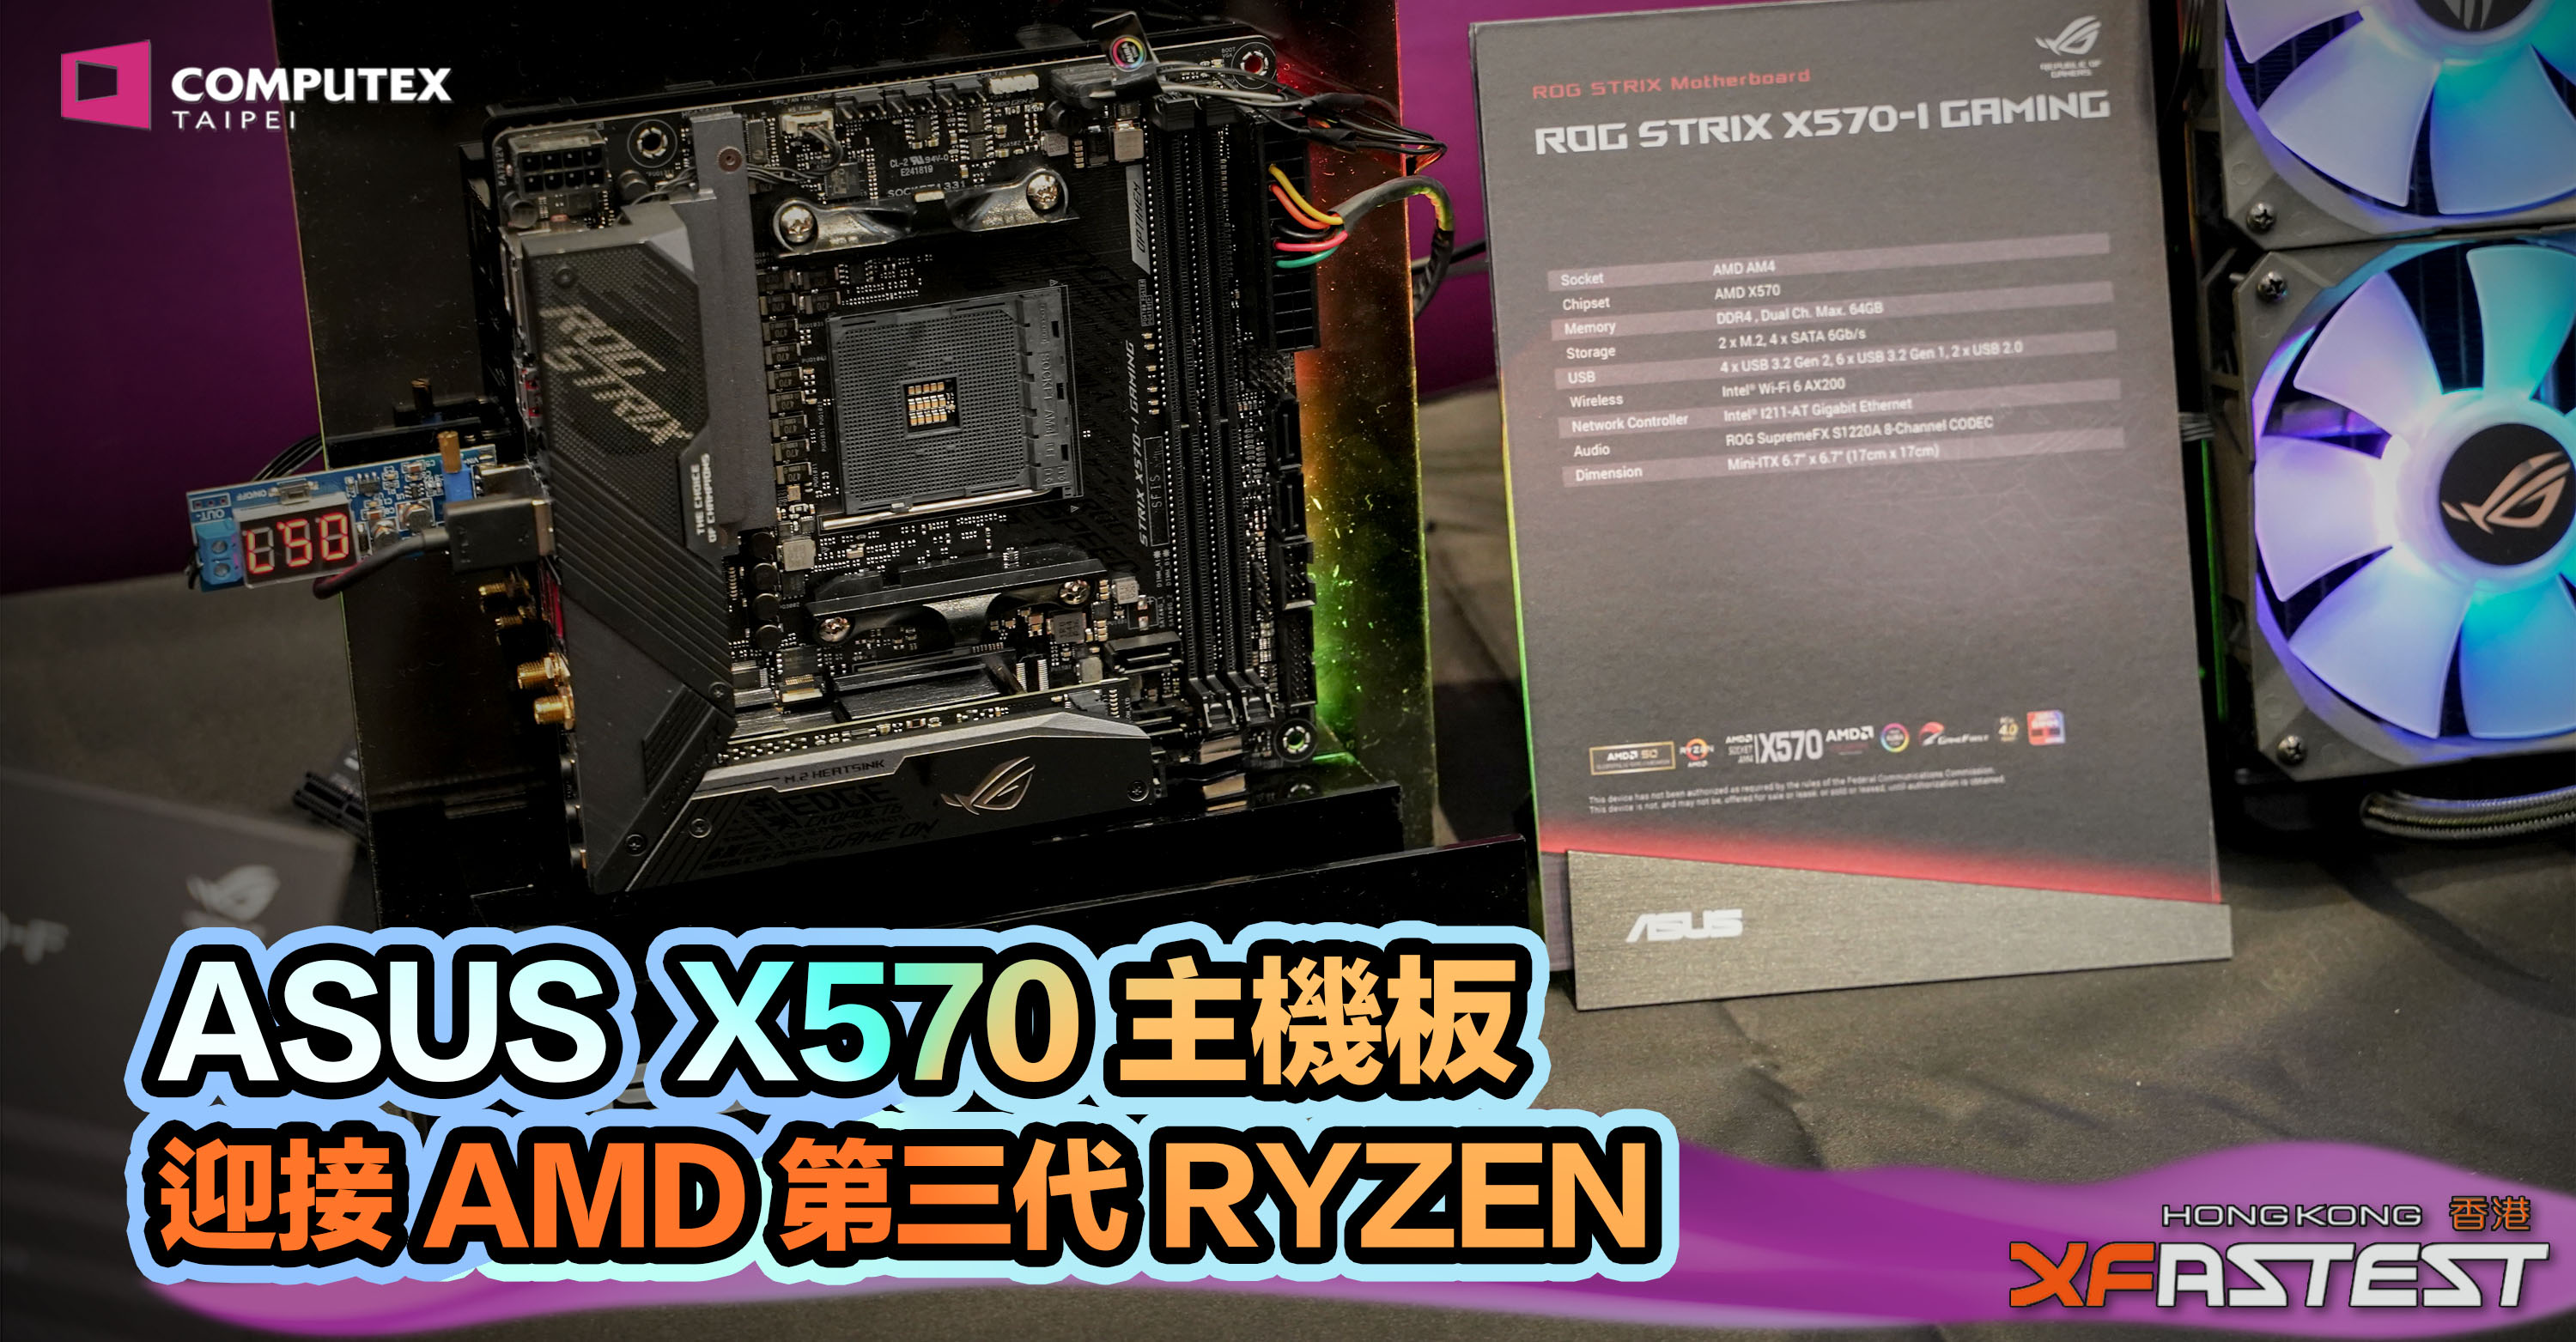 Computex 19 Asus 多款amd X570 主機板迎接全新amd 第三代ryzen 處理器 Xfastest Hong Kong